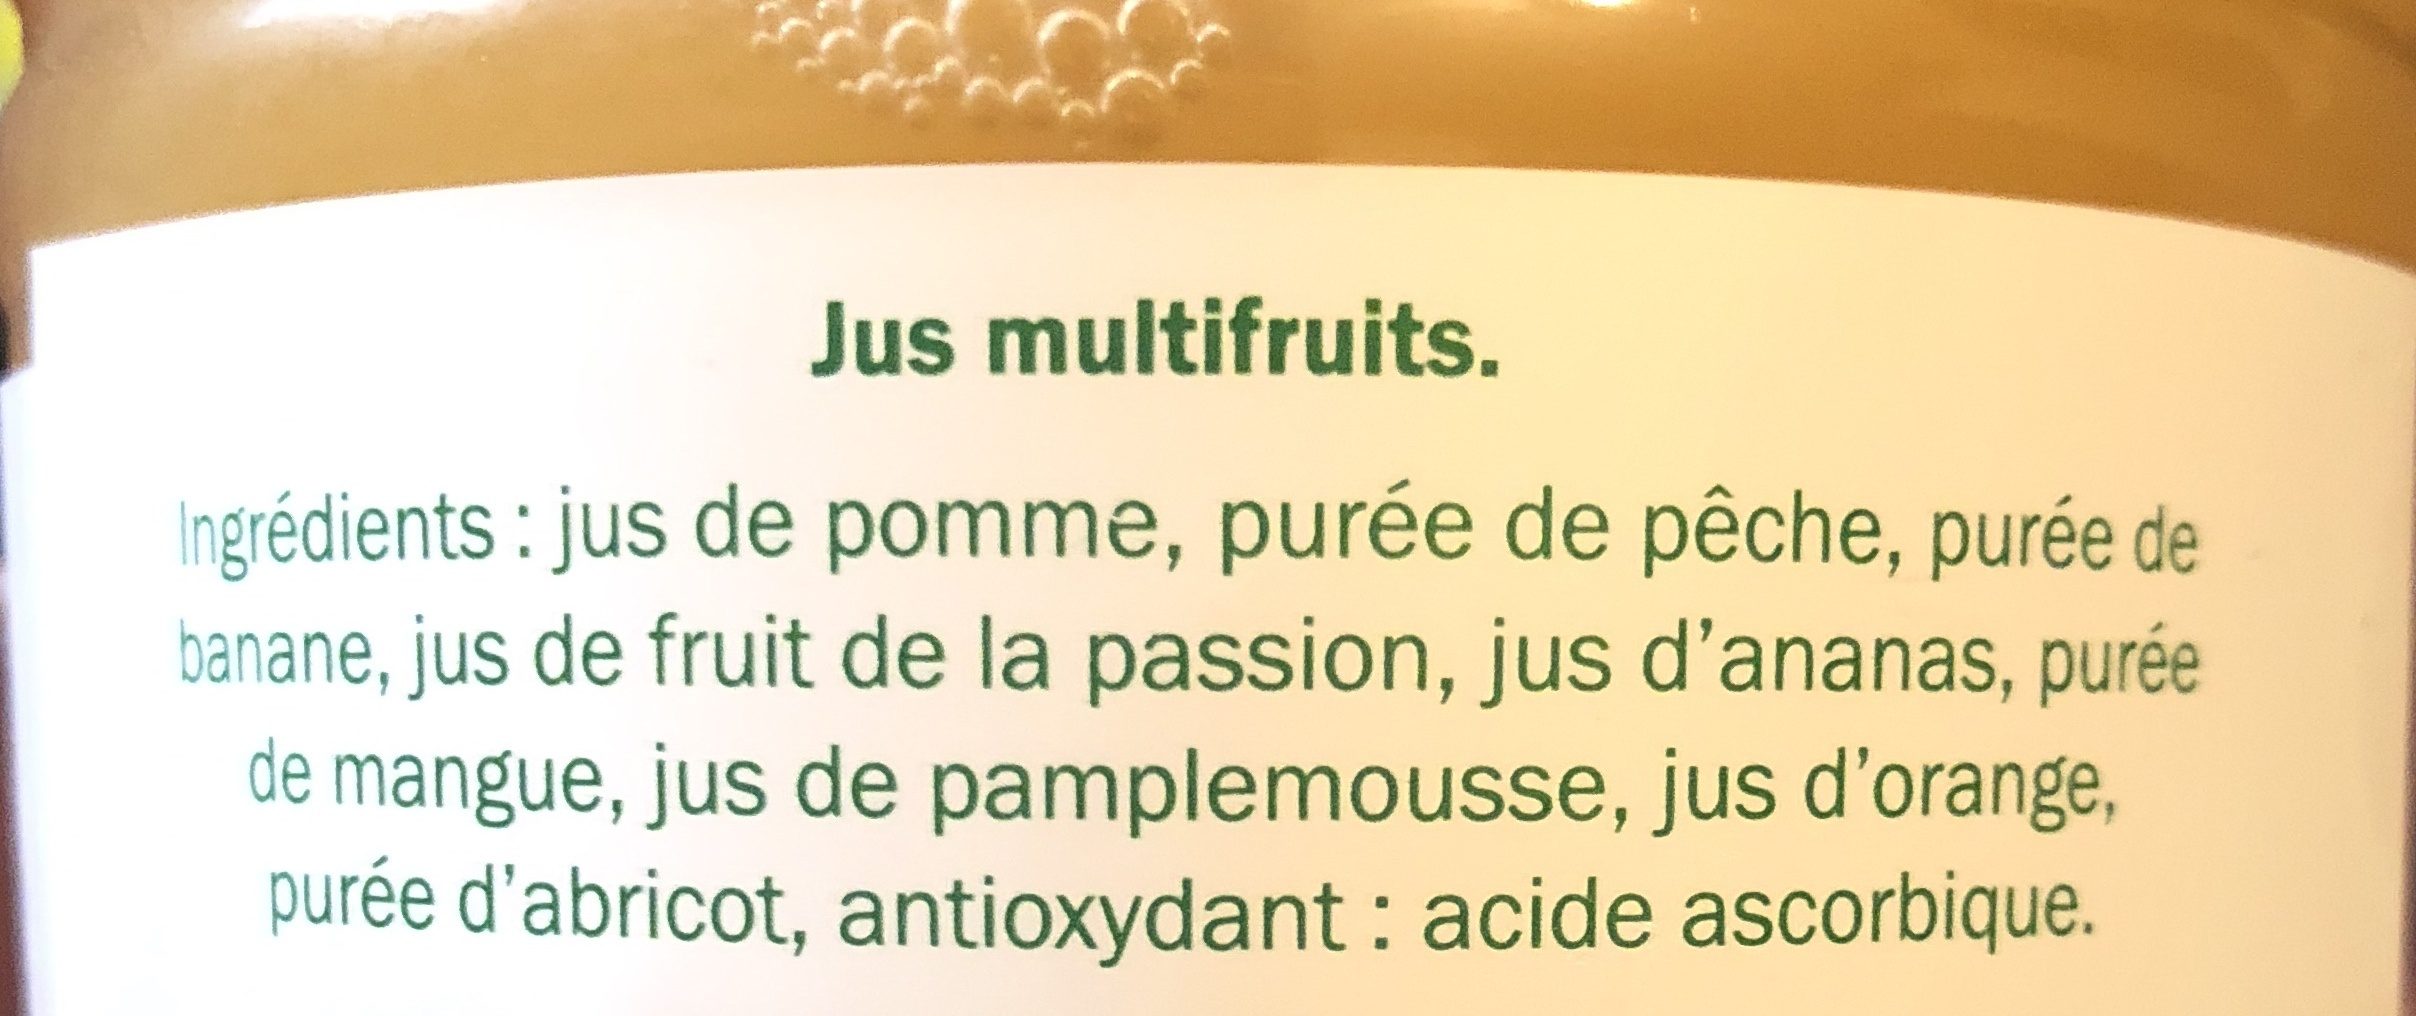 SOLEVITA MULTIFRUITS - Ingredients - fr